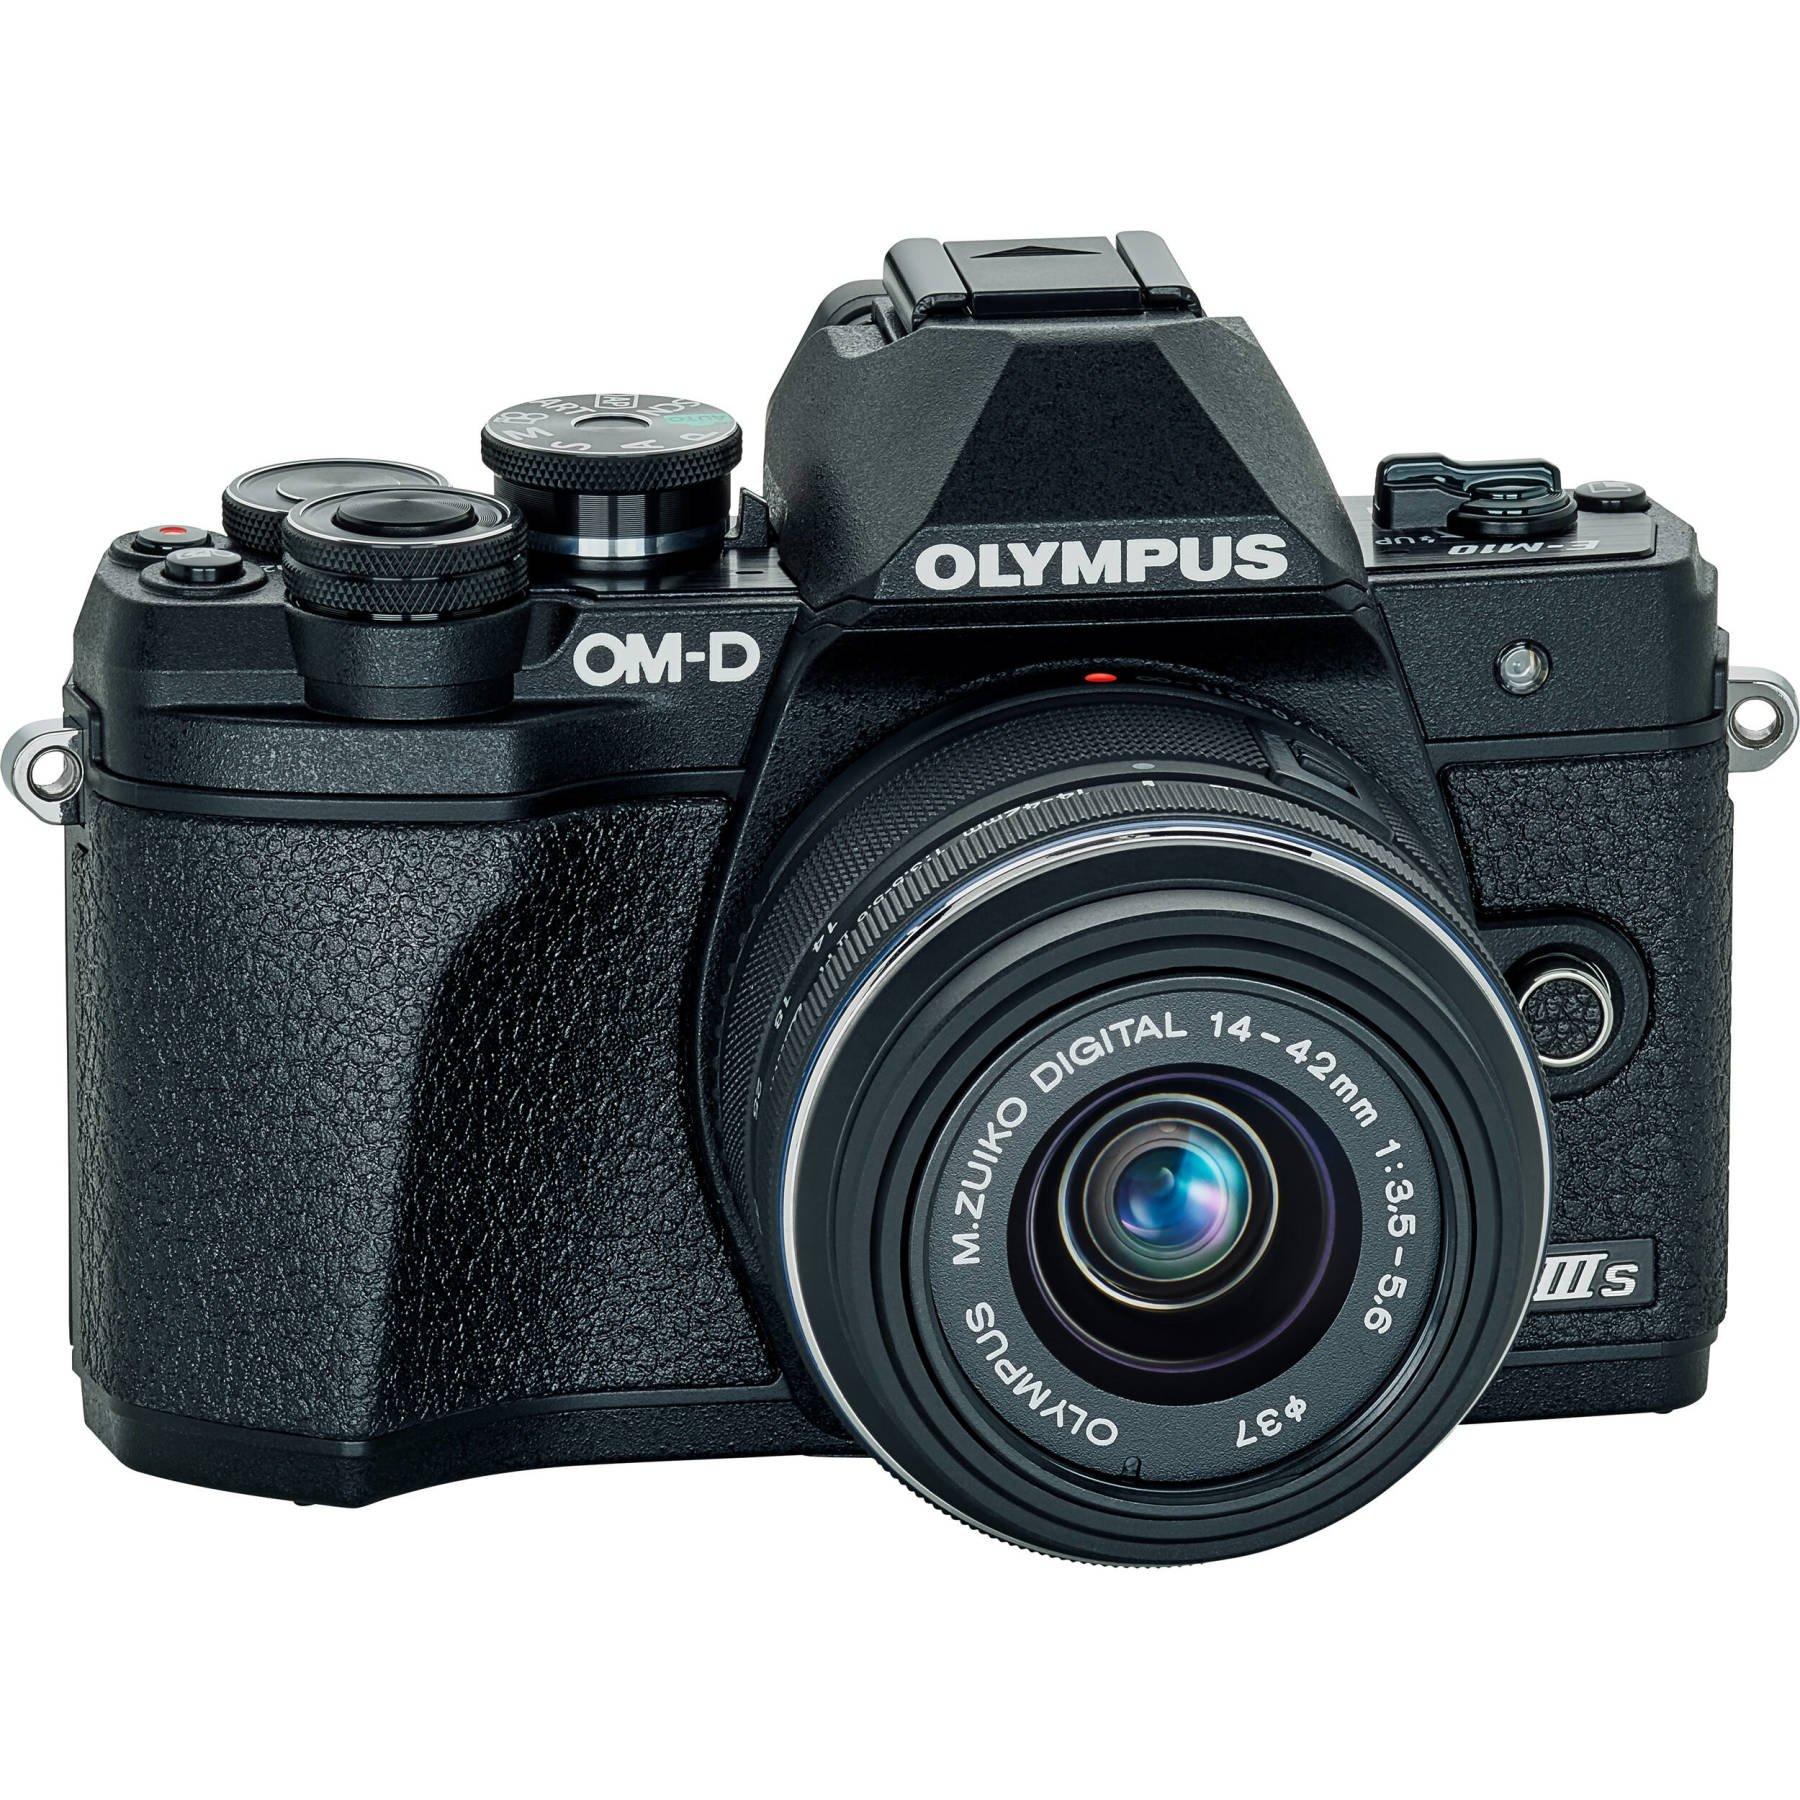 list item 1 of 5 Olympus OM-D E-M10 Mark III Mirrorless Digital Camera with 14-42mm II R Lens